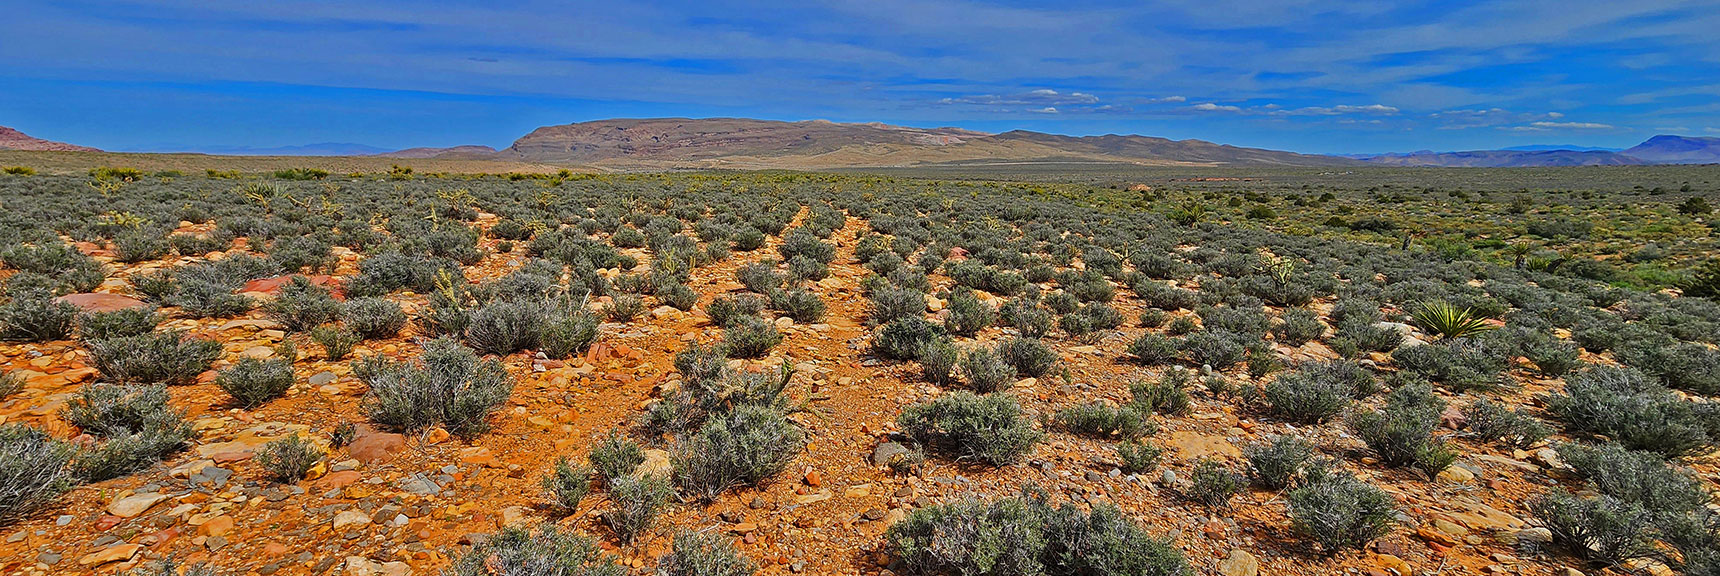 View Down Historic Road SE (opposite direction) Toward Blue Diamond Hill | Historic Roads in Red Rock Canyon, Nevada | David Smith | LasVegasAreaTrails.com